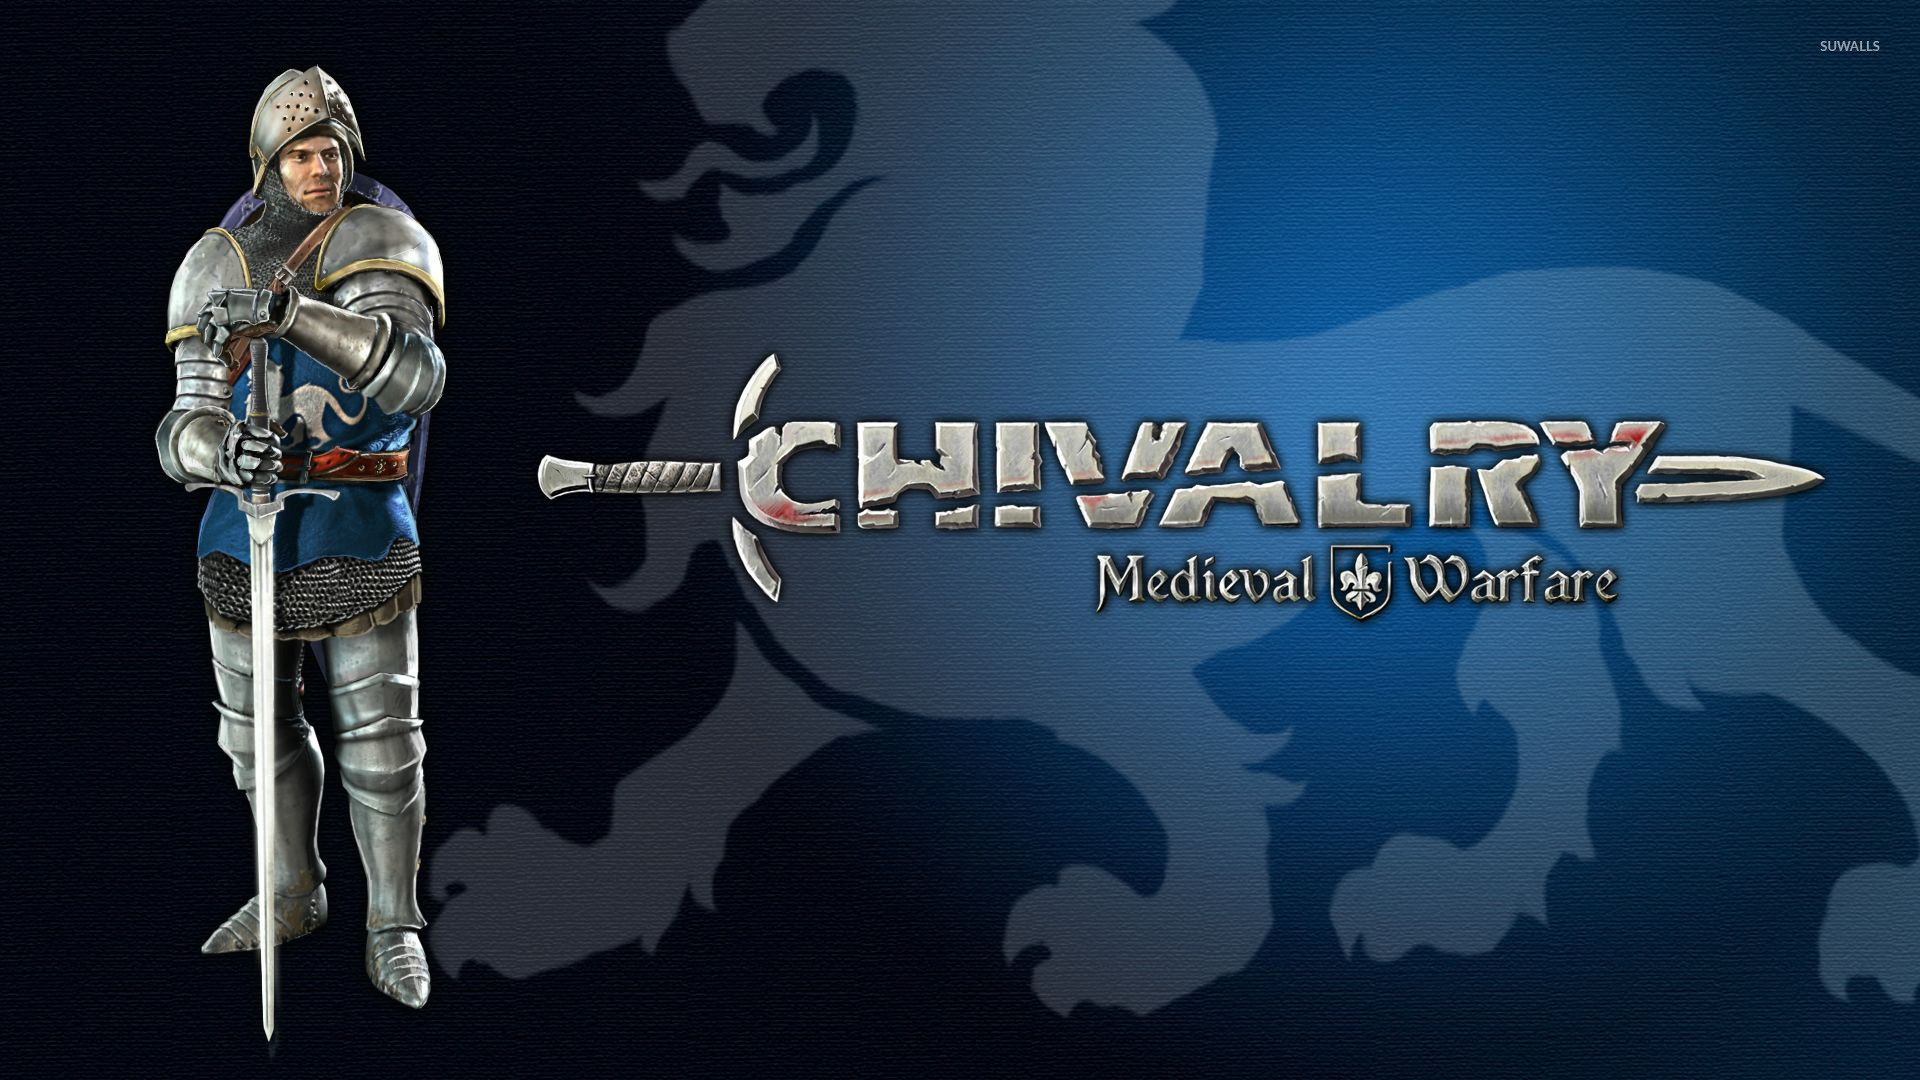 Chivalry Medieval Warfare Wallpaper Game